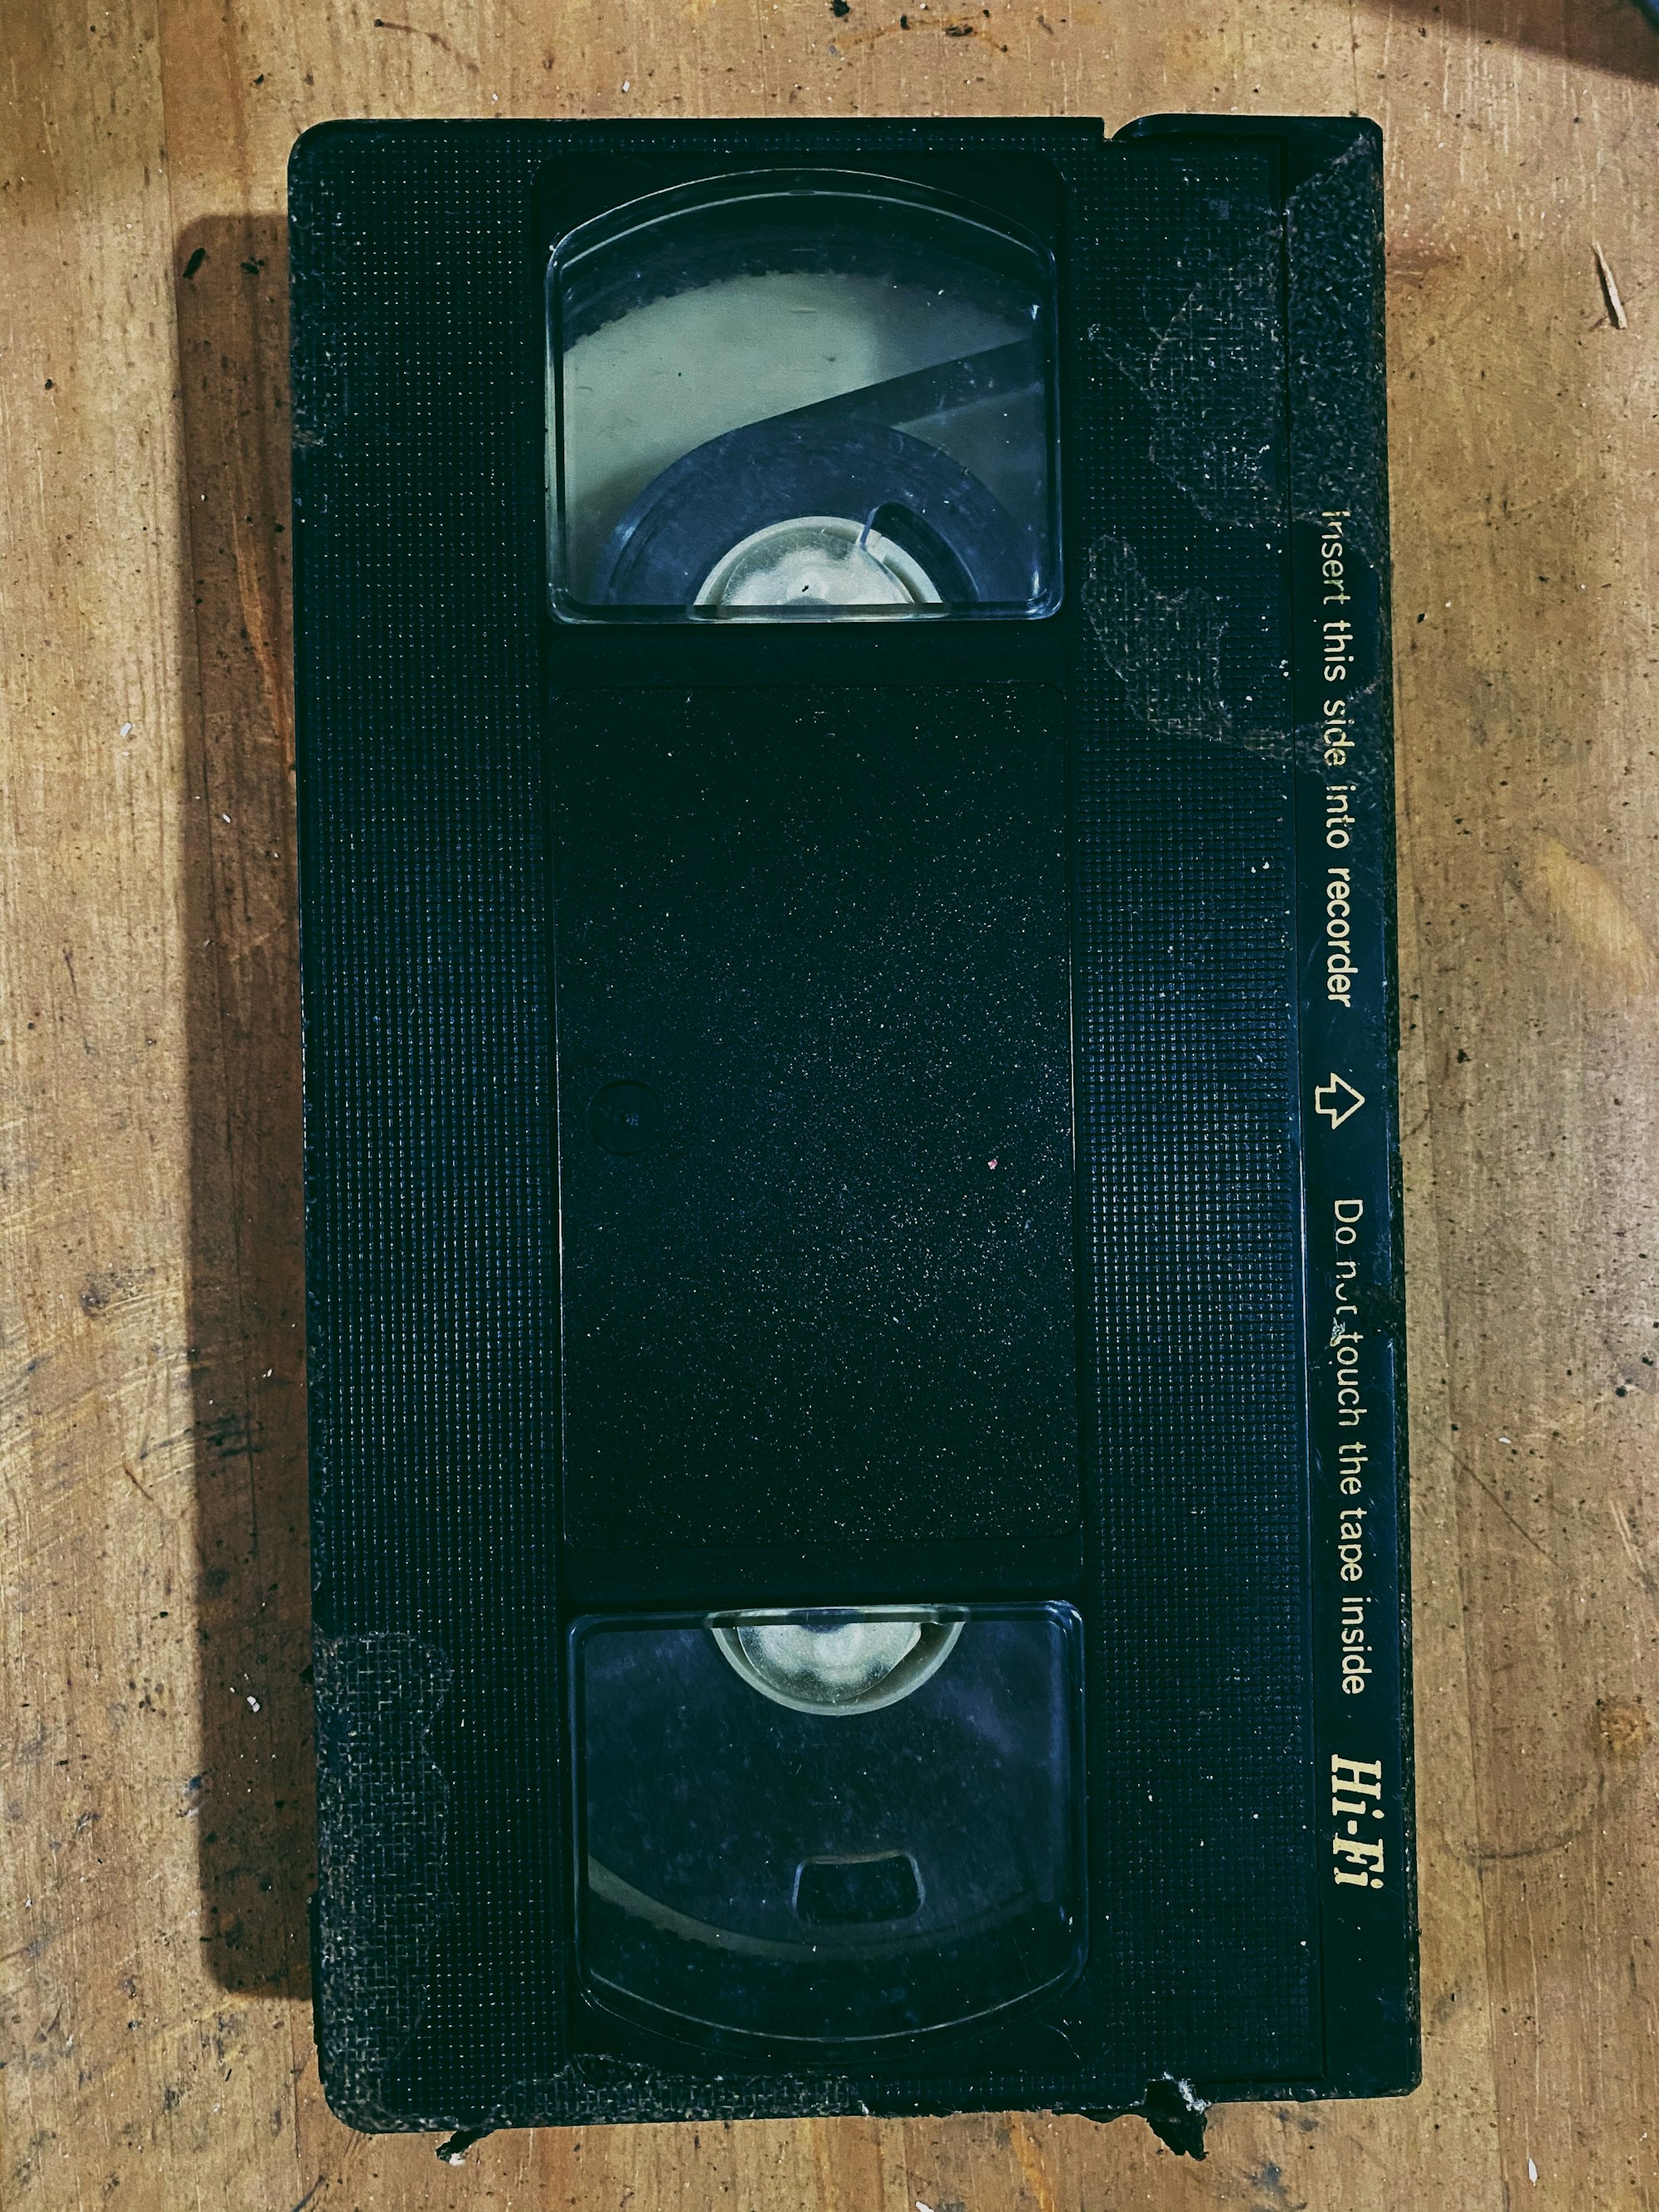 VHS TAPE